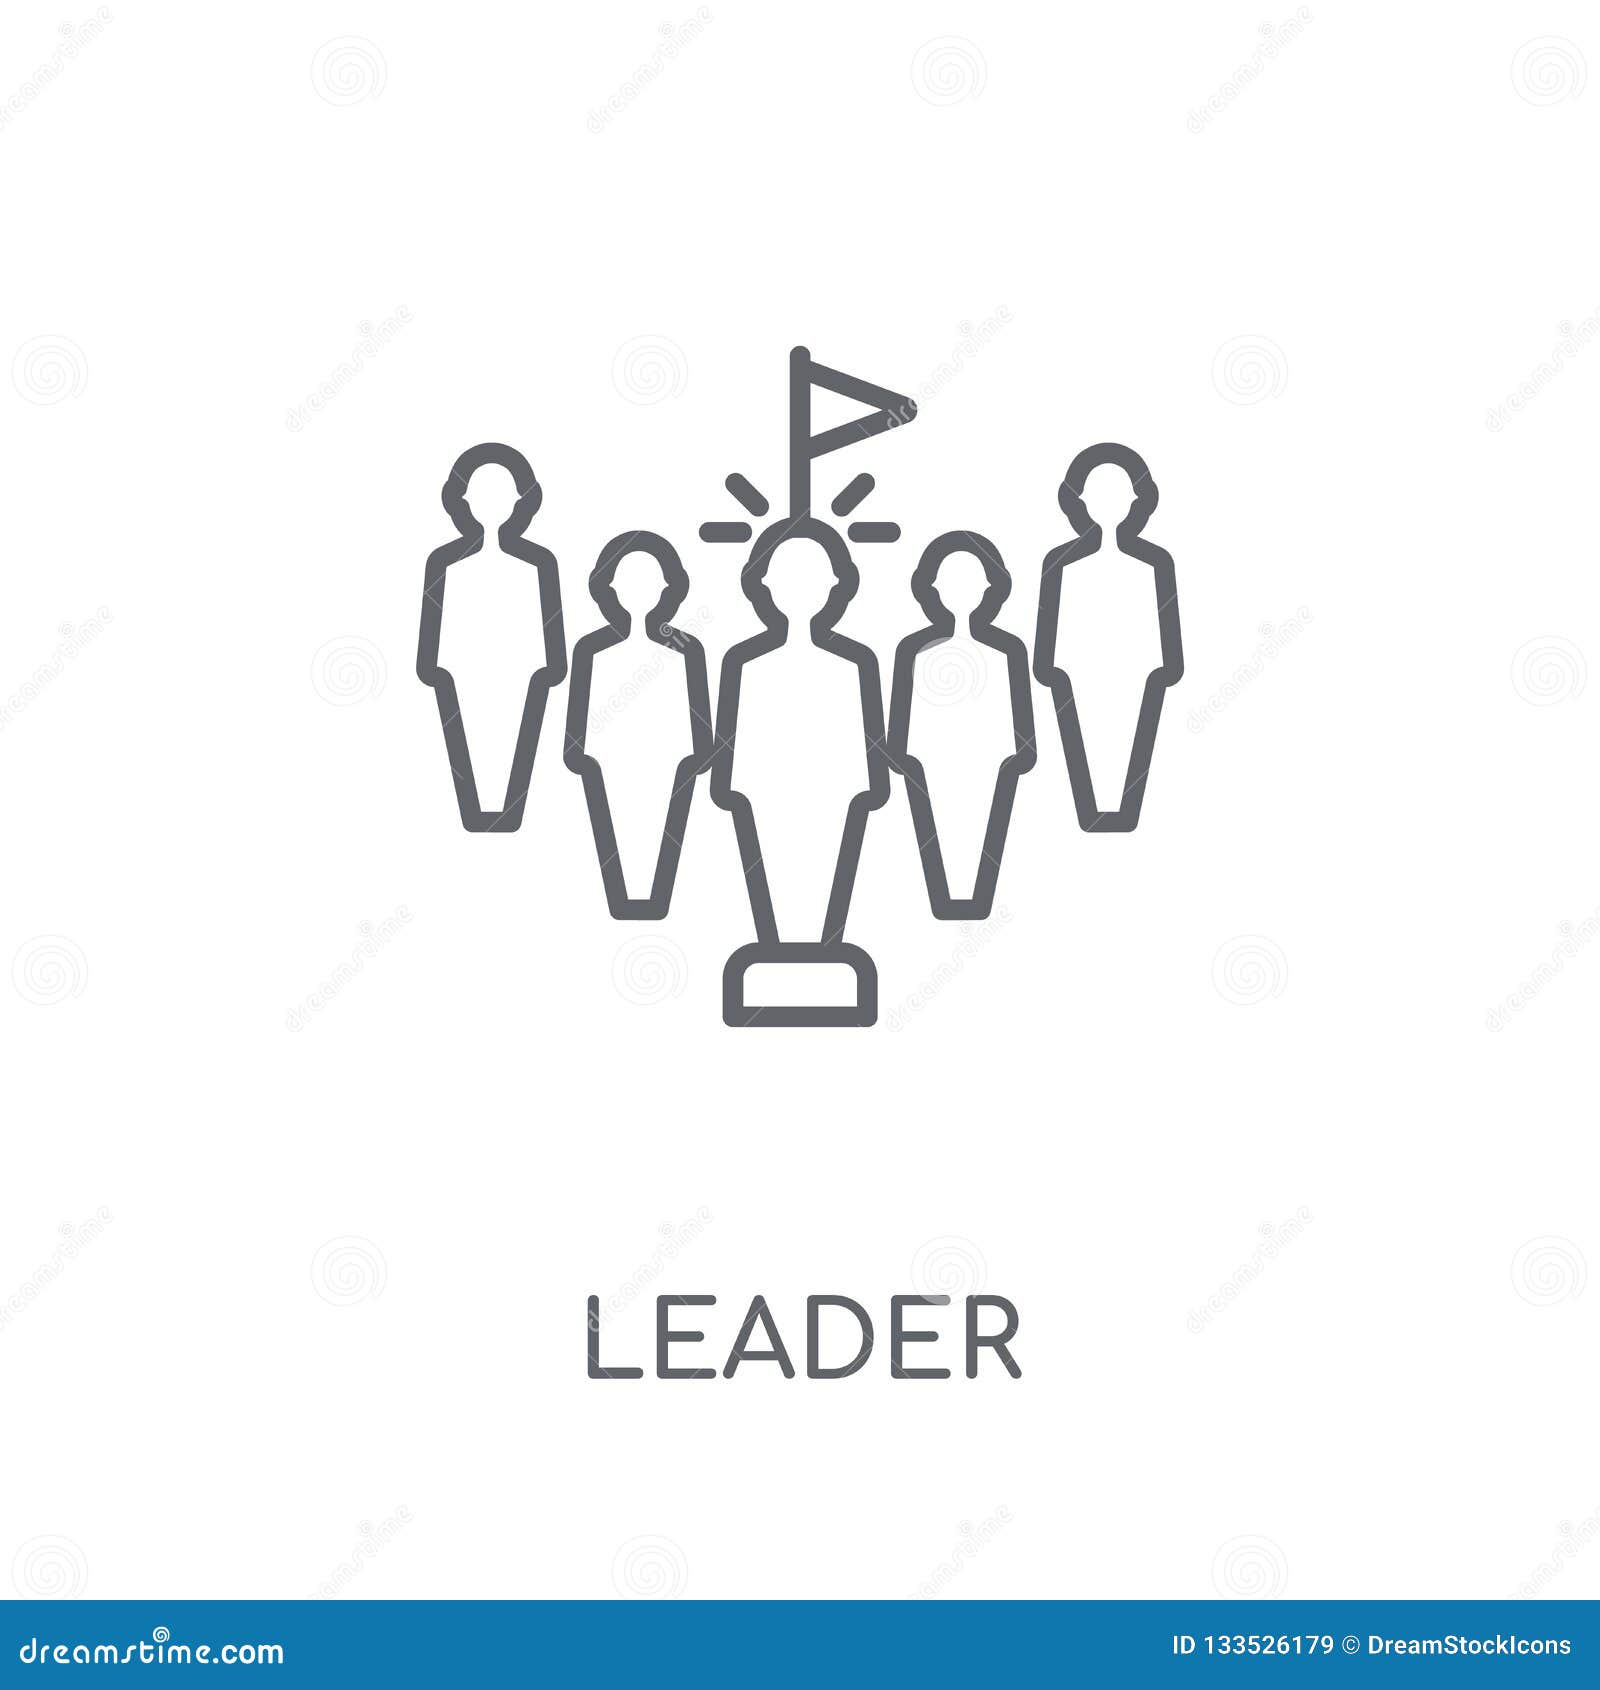 Leader Linear Icon. Modern Outline Leader Logo Concept on White